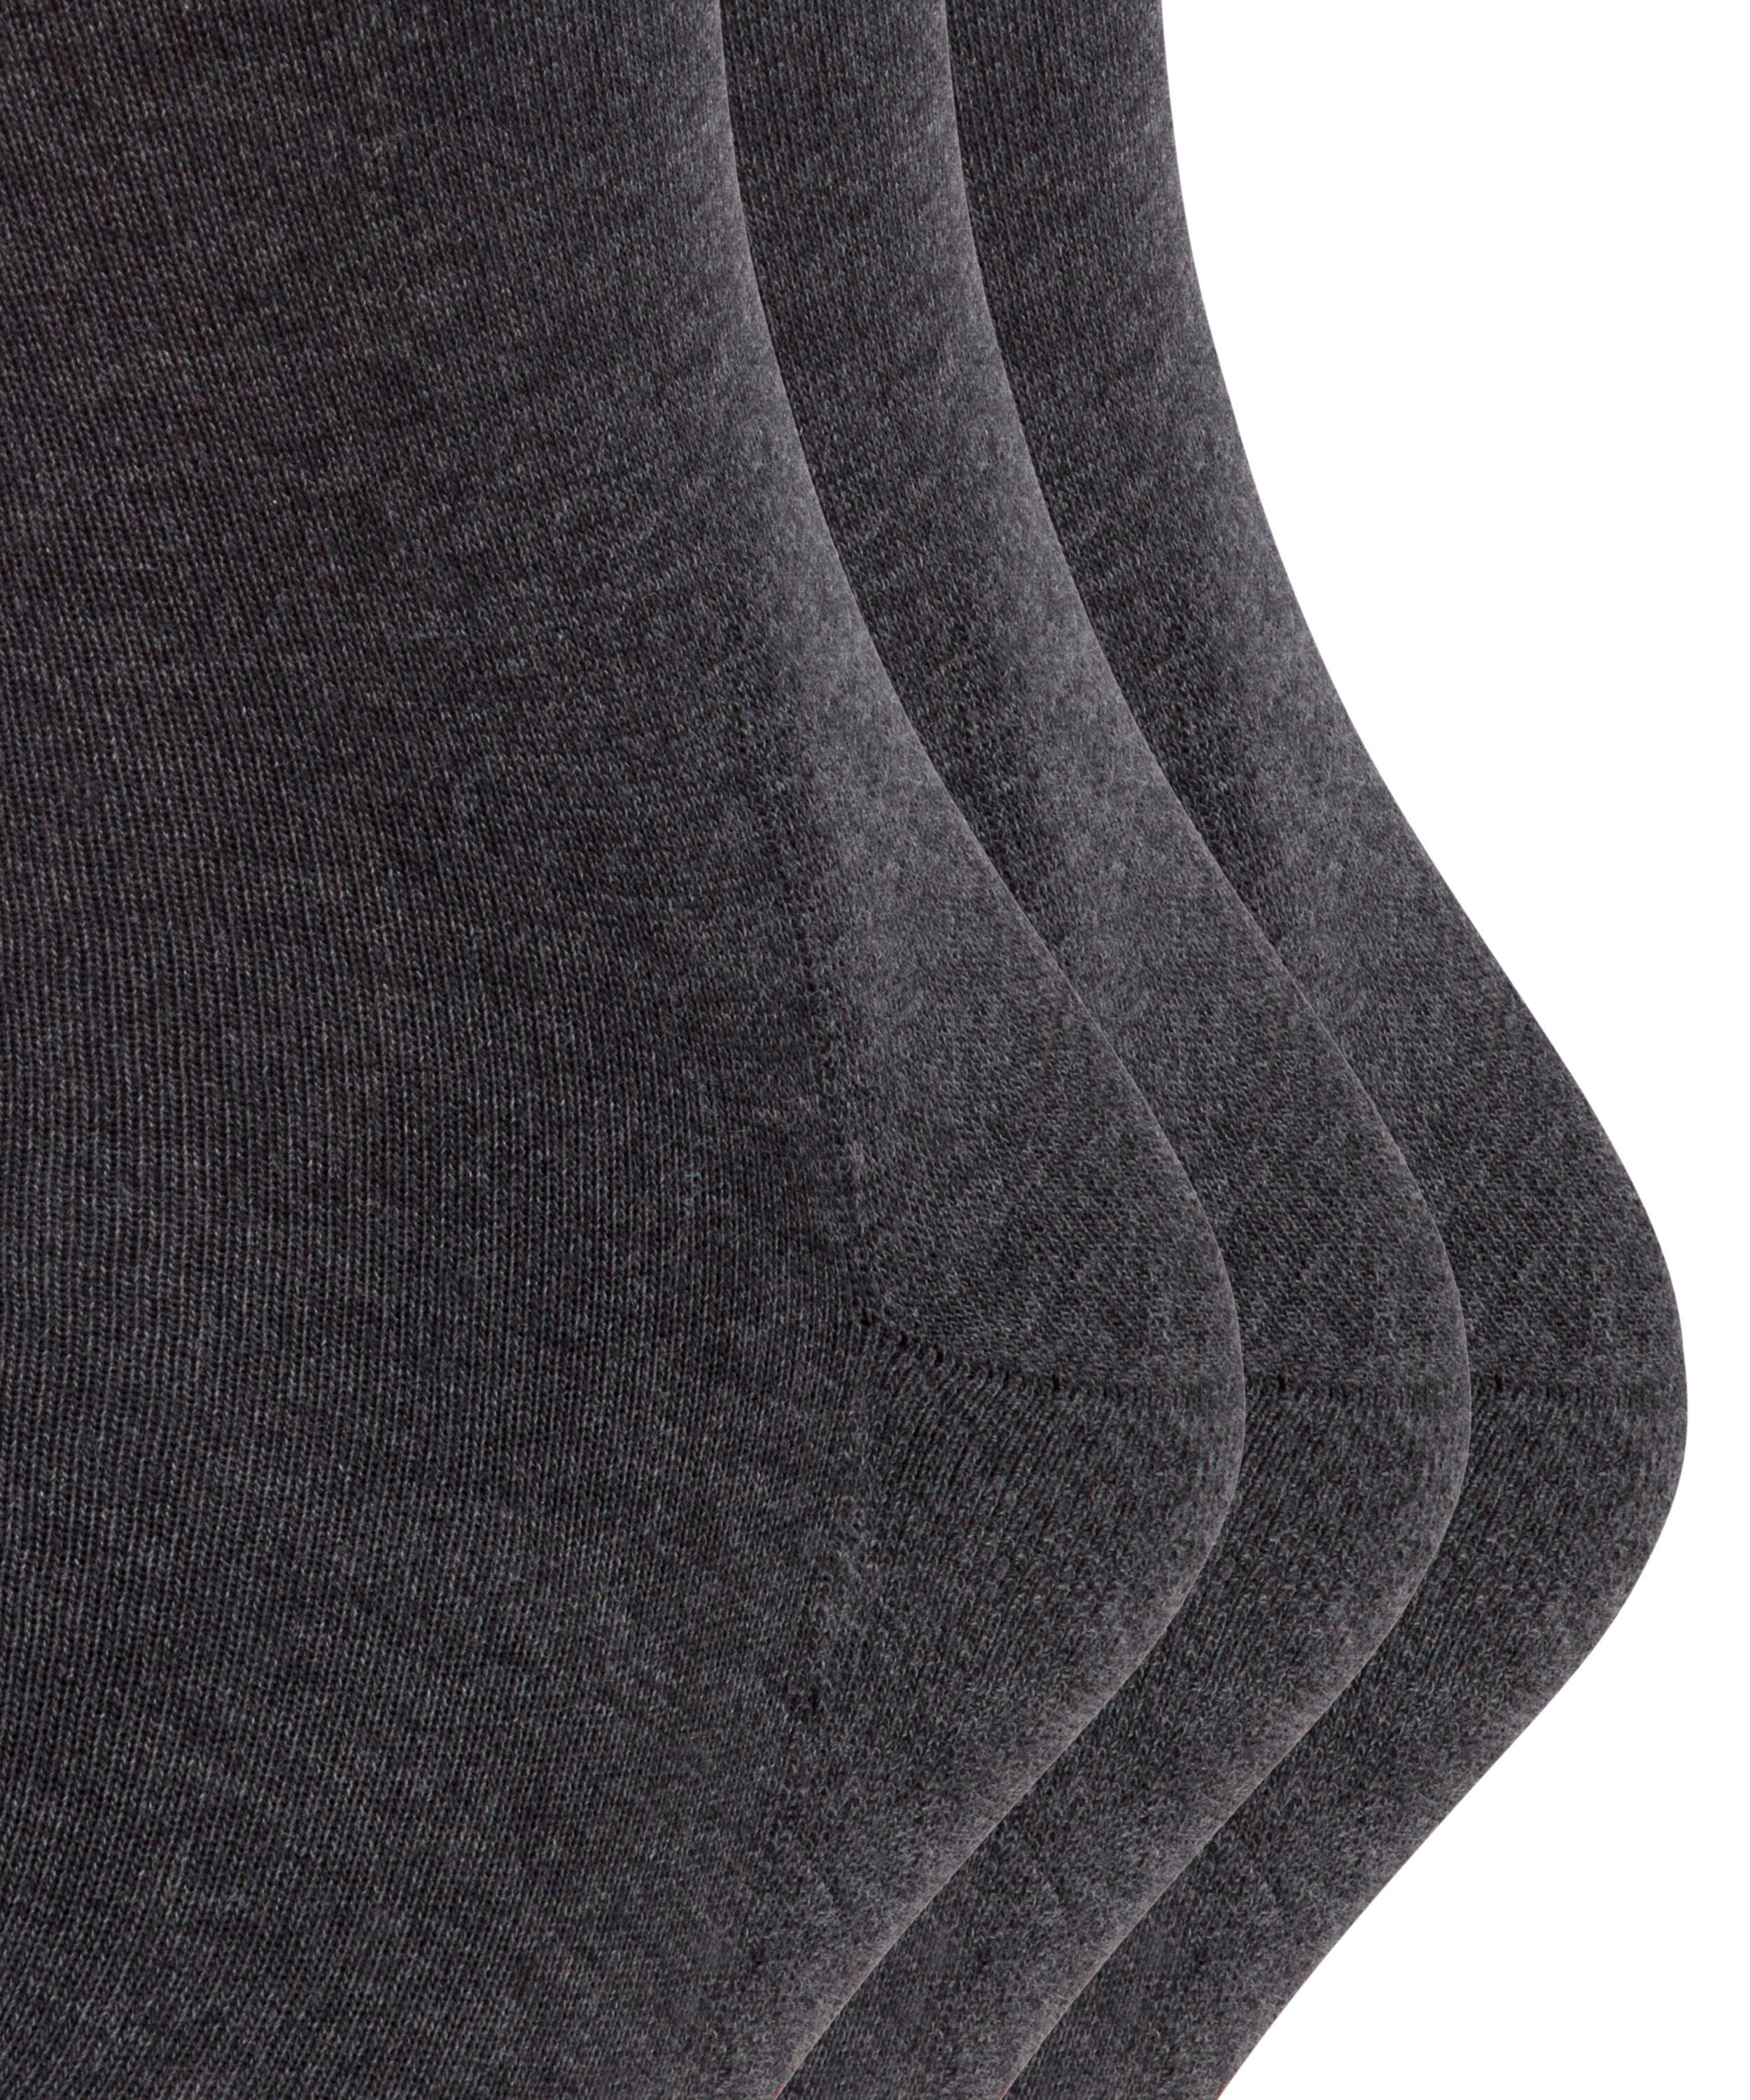 (3970) grey FALKE 3-Pack (3-Paar) dark Run Socken